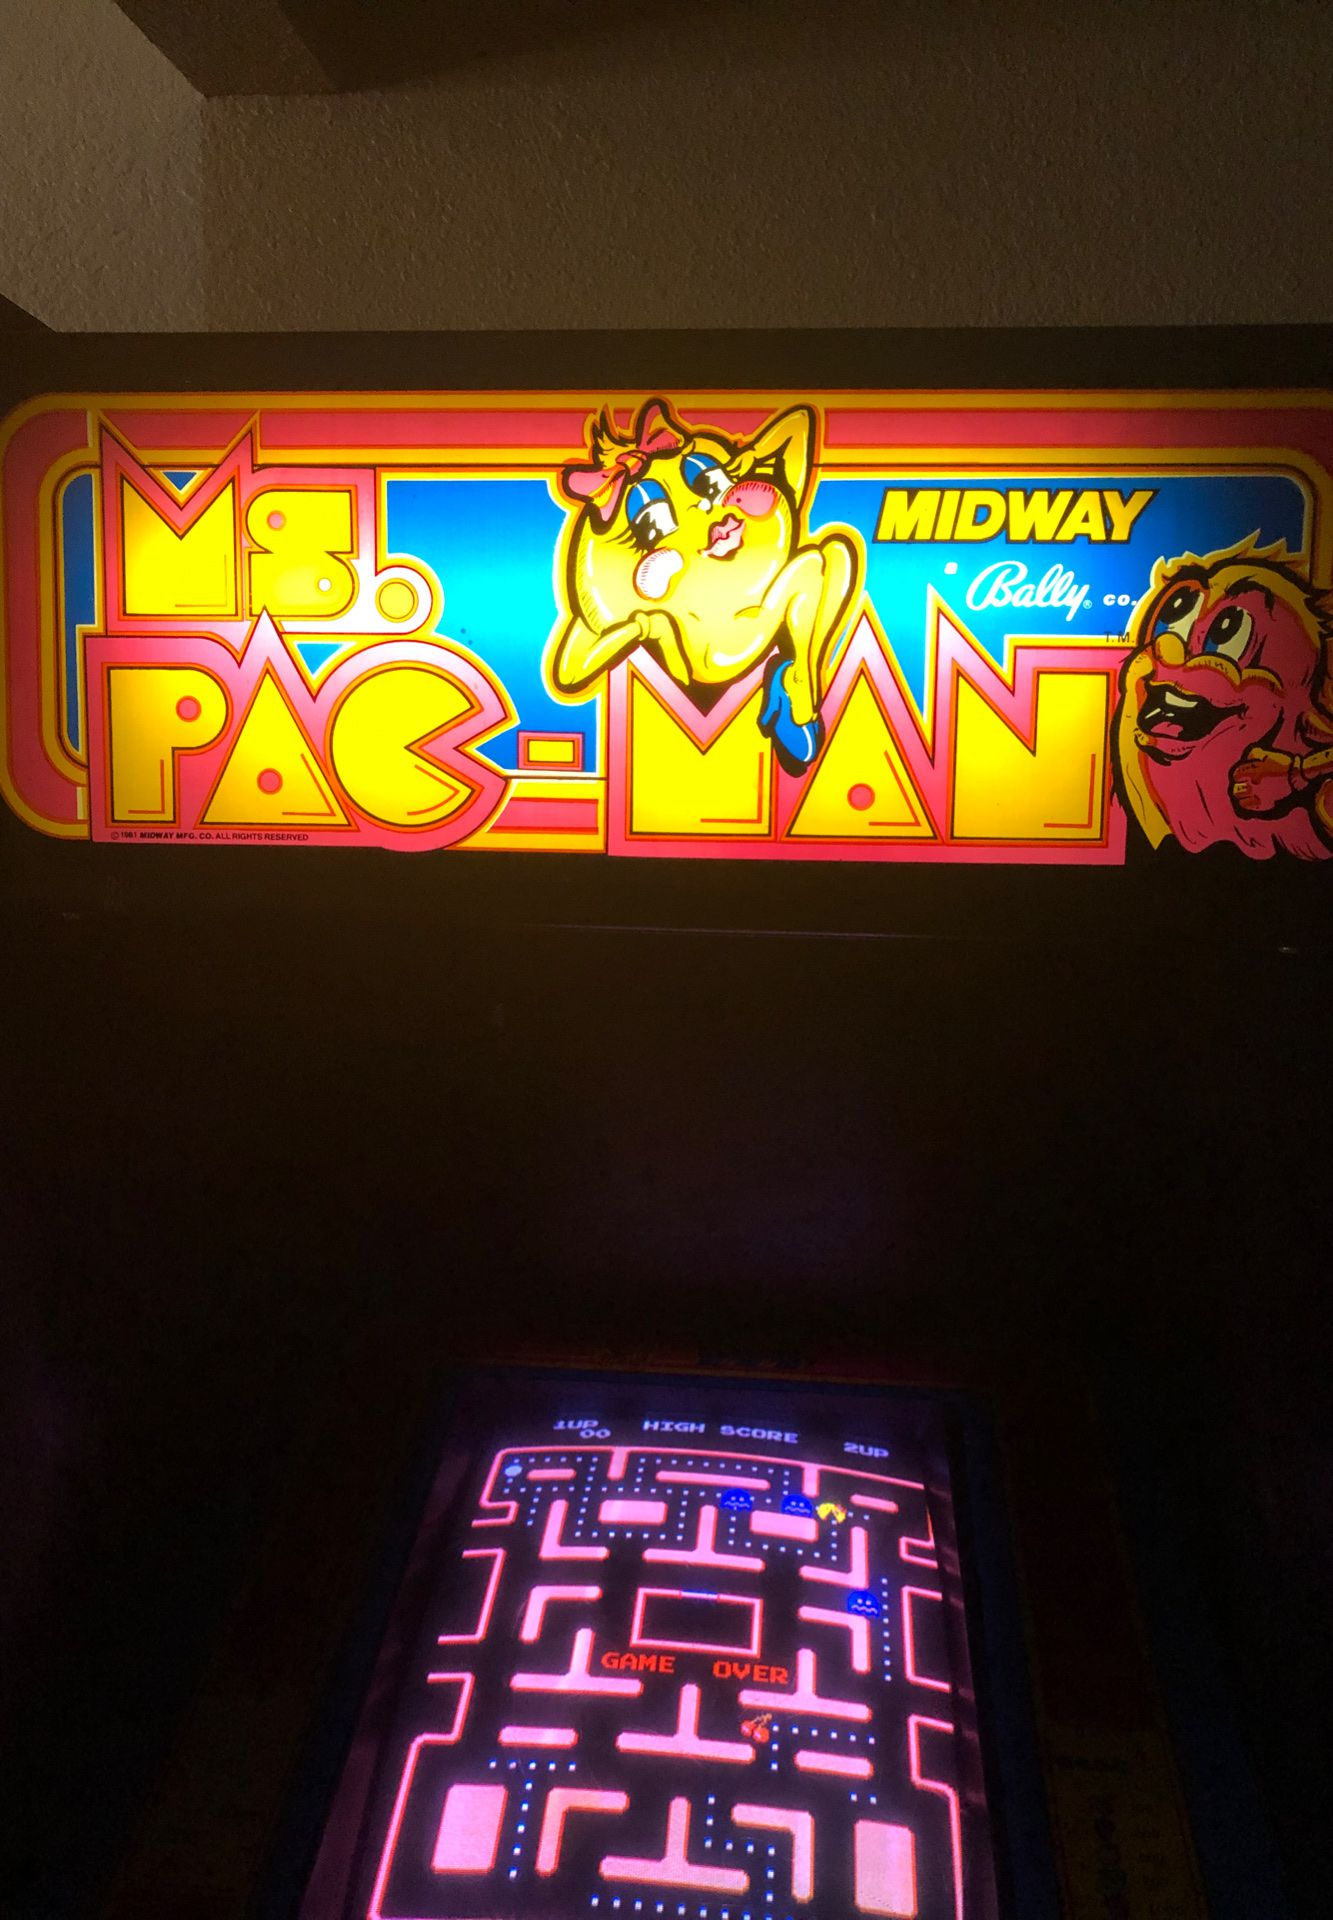 Vintage arcade video game